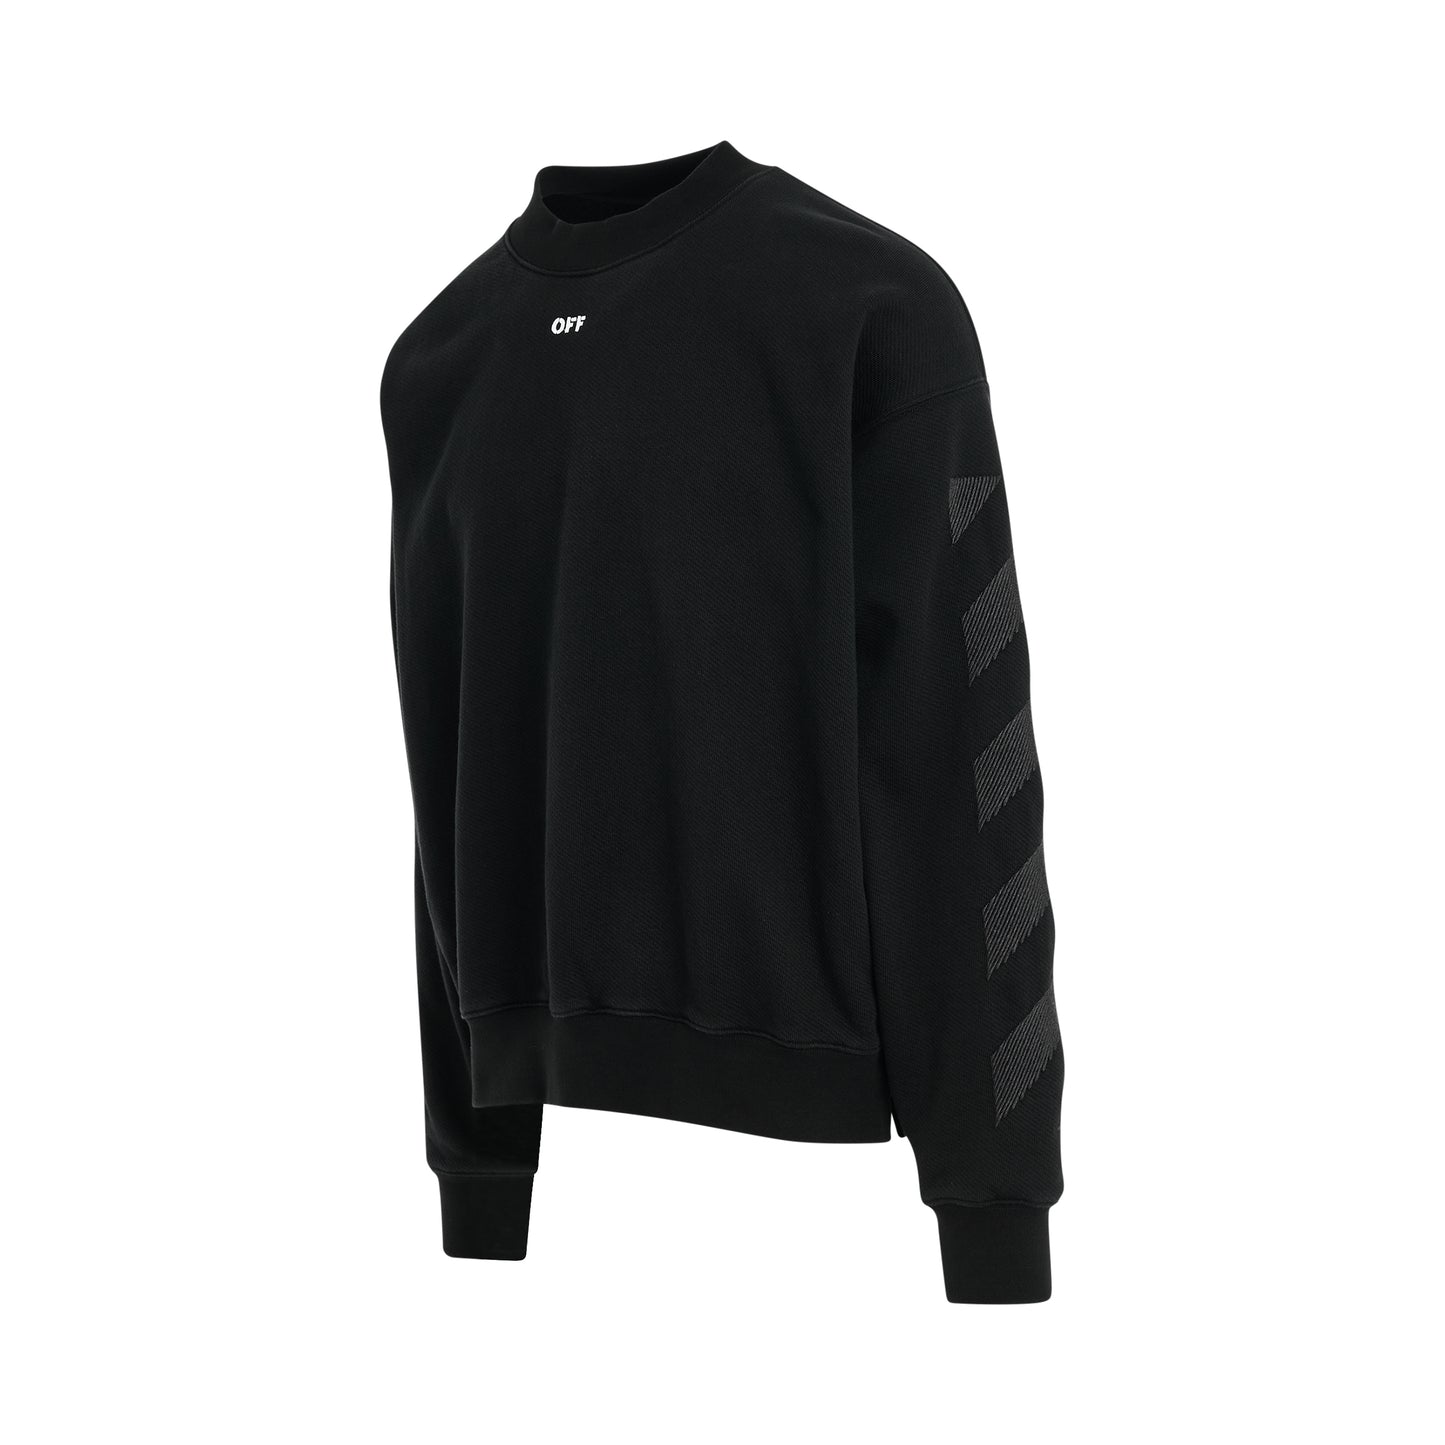 Cornely Diagonal Skate Sweatshirt in Black/White